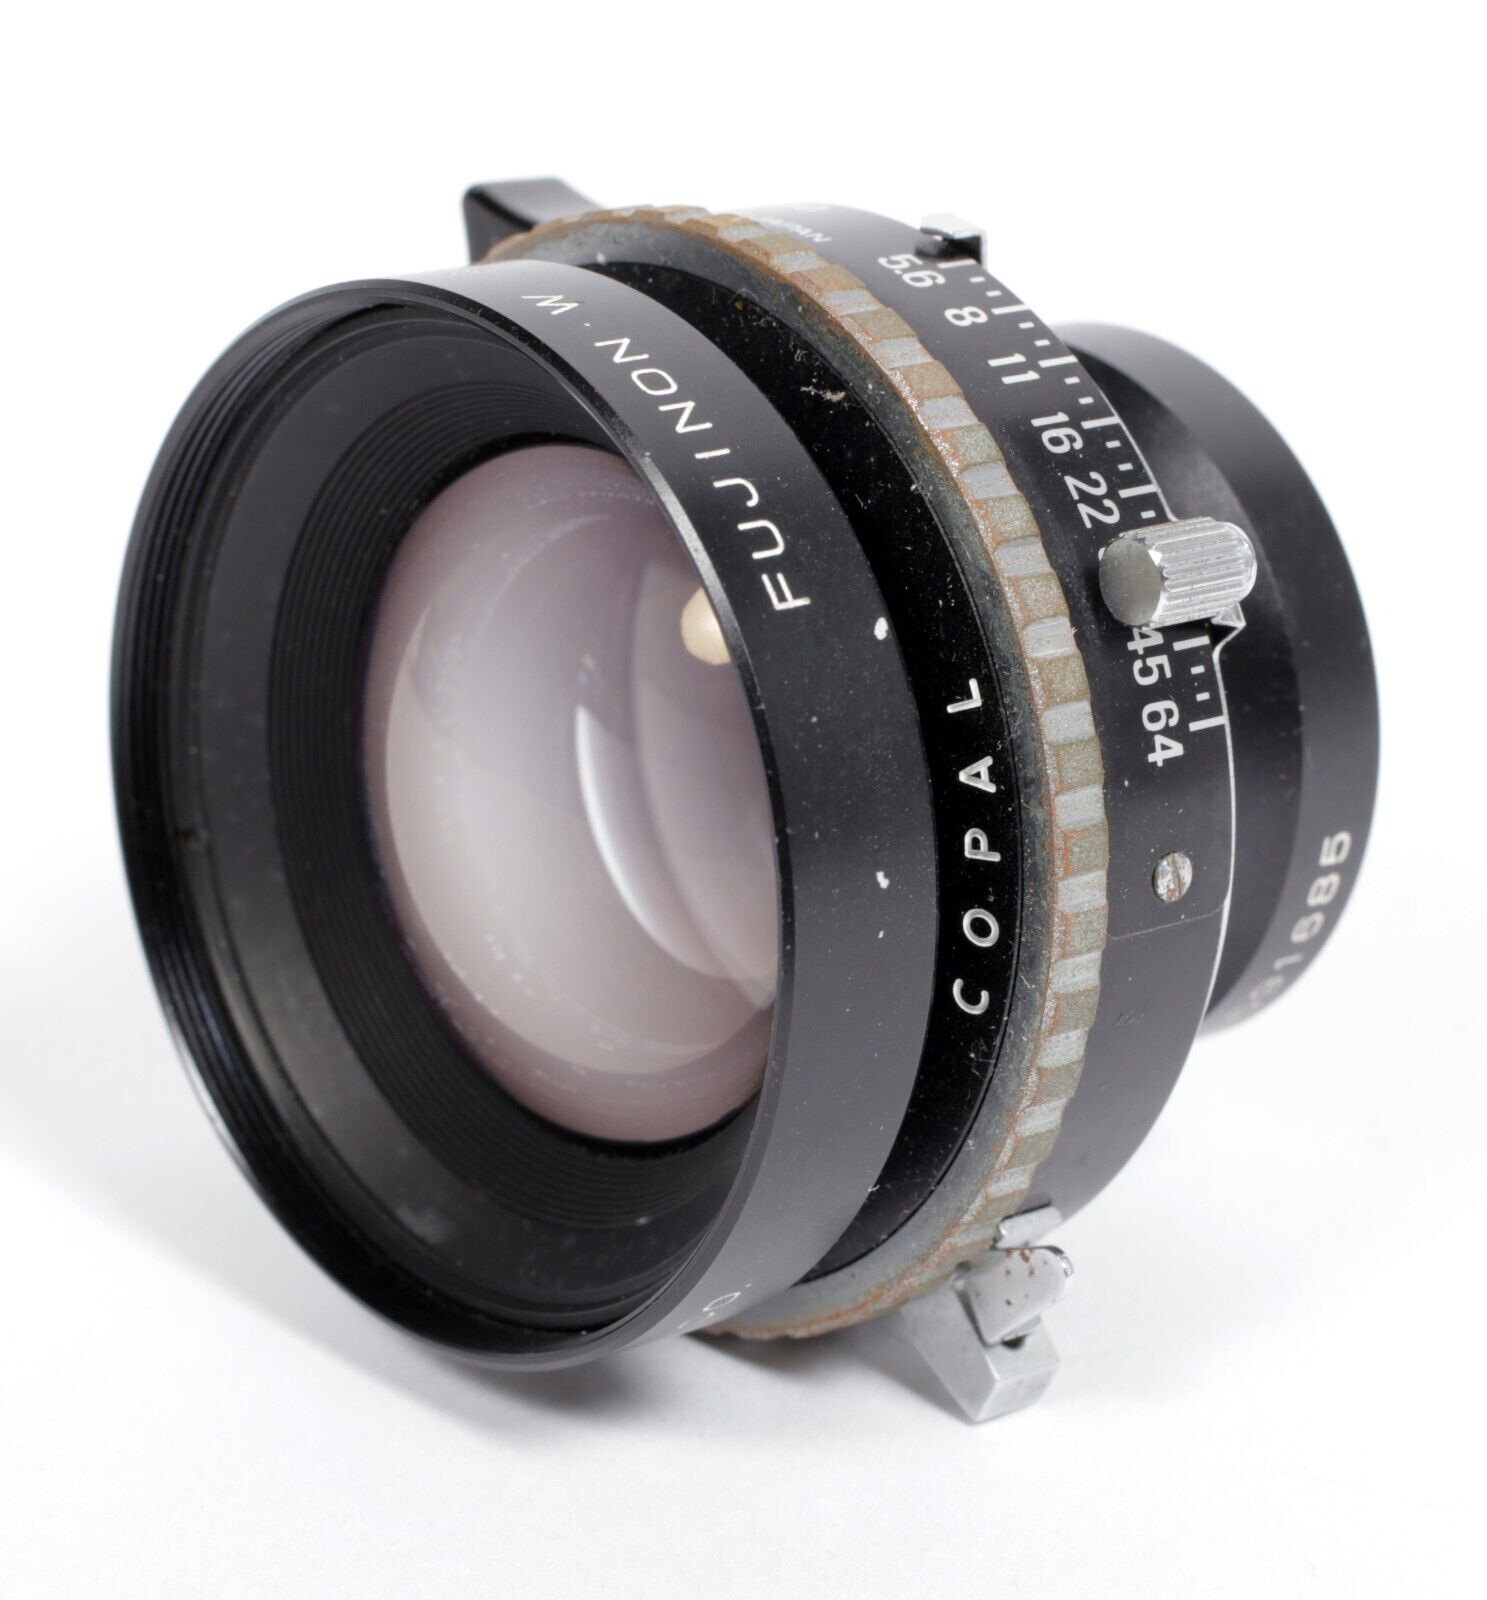 Fujifilm Fujinon-W 125mm f/5.6 0483